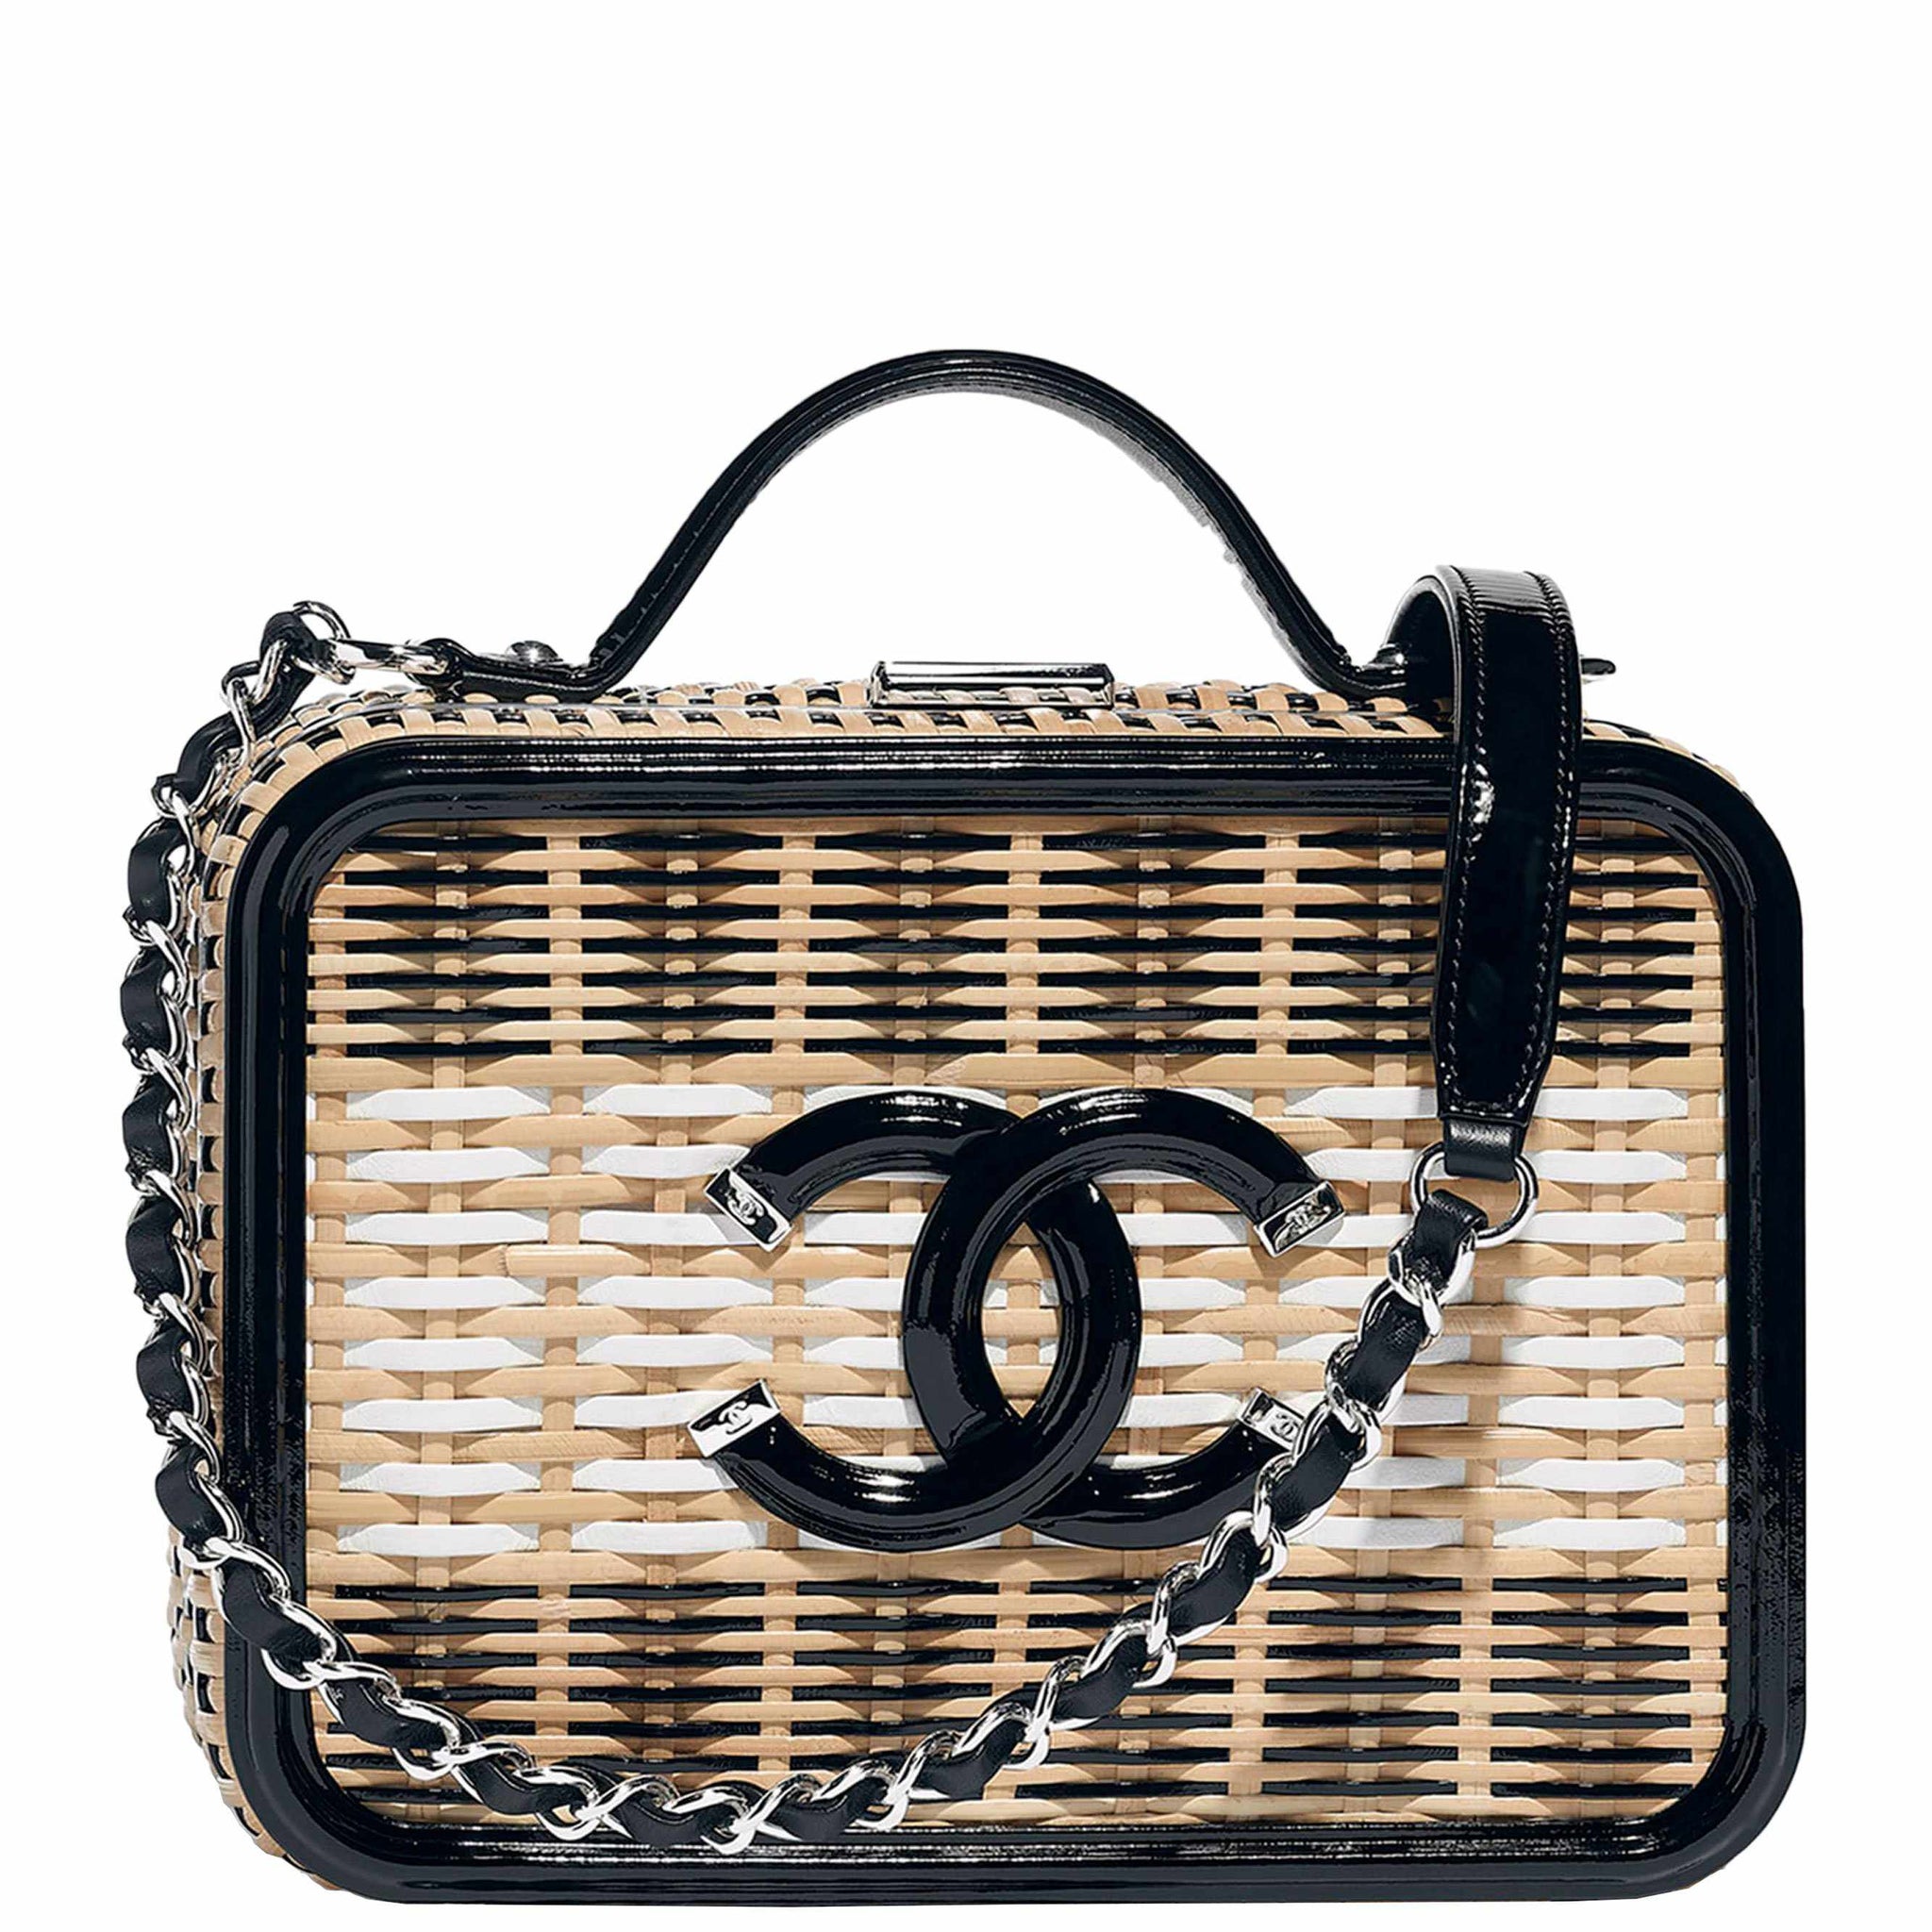 Chanel Vintage Vanity Case Review 